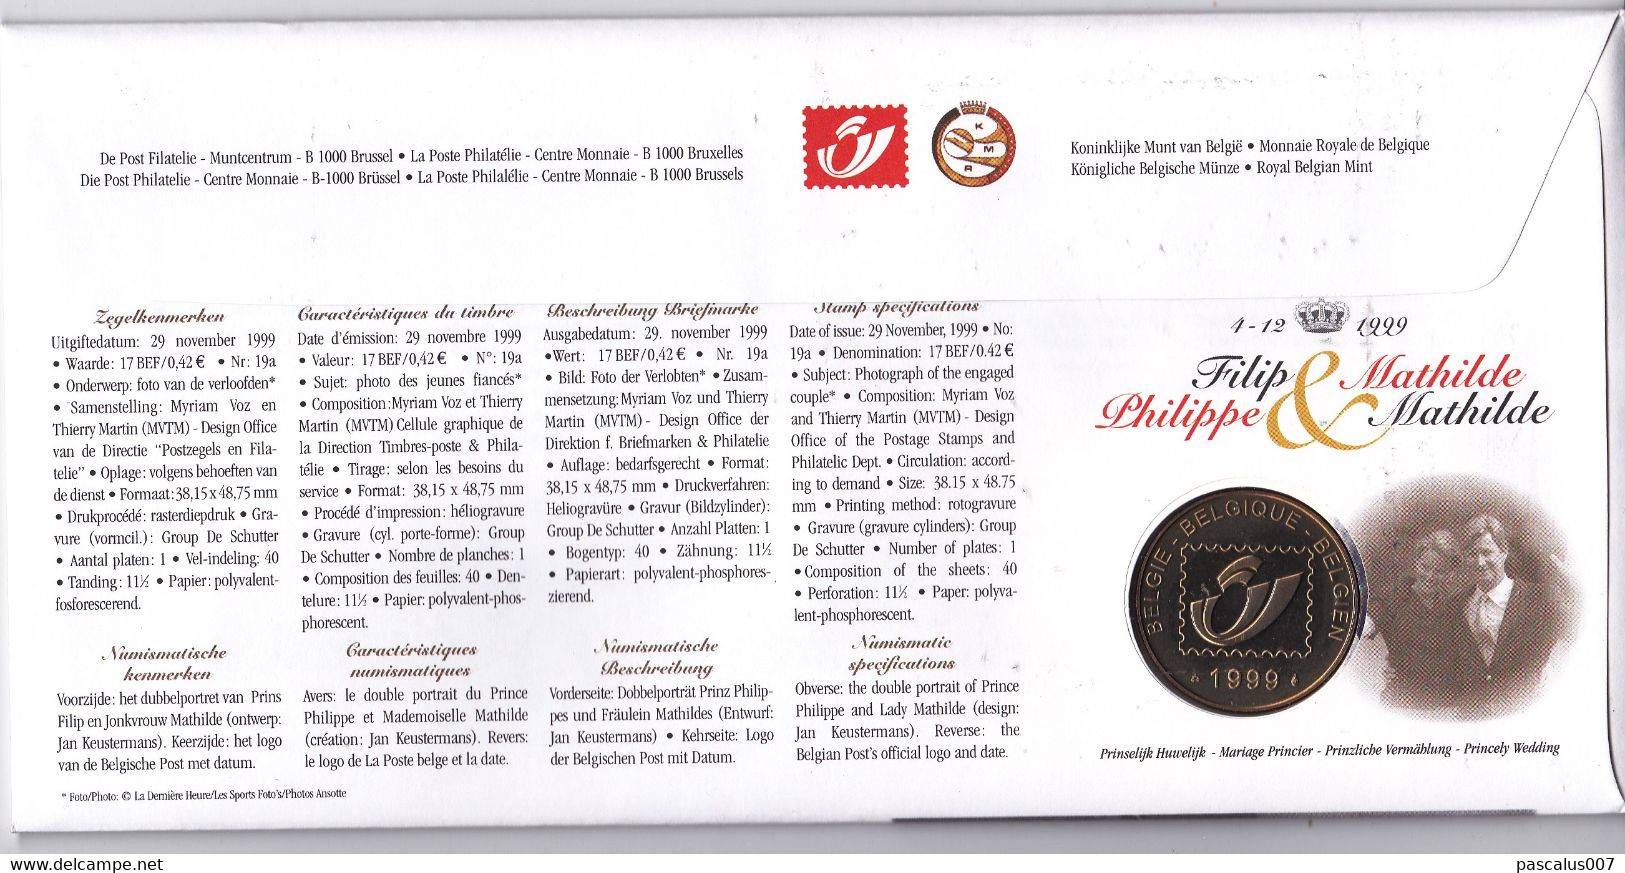 B01-372 2856 Enveloppe Numisletter Numiscover FDC Mariage Princier Philippe Mathilde 29-11-1999 Bruxelles1 1000 Brussel1 - Numisletter